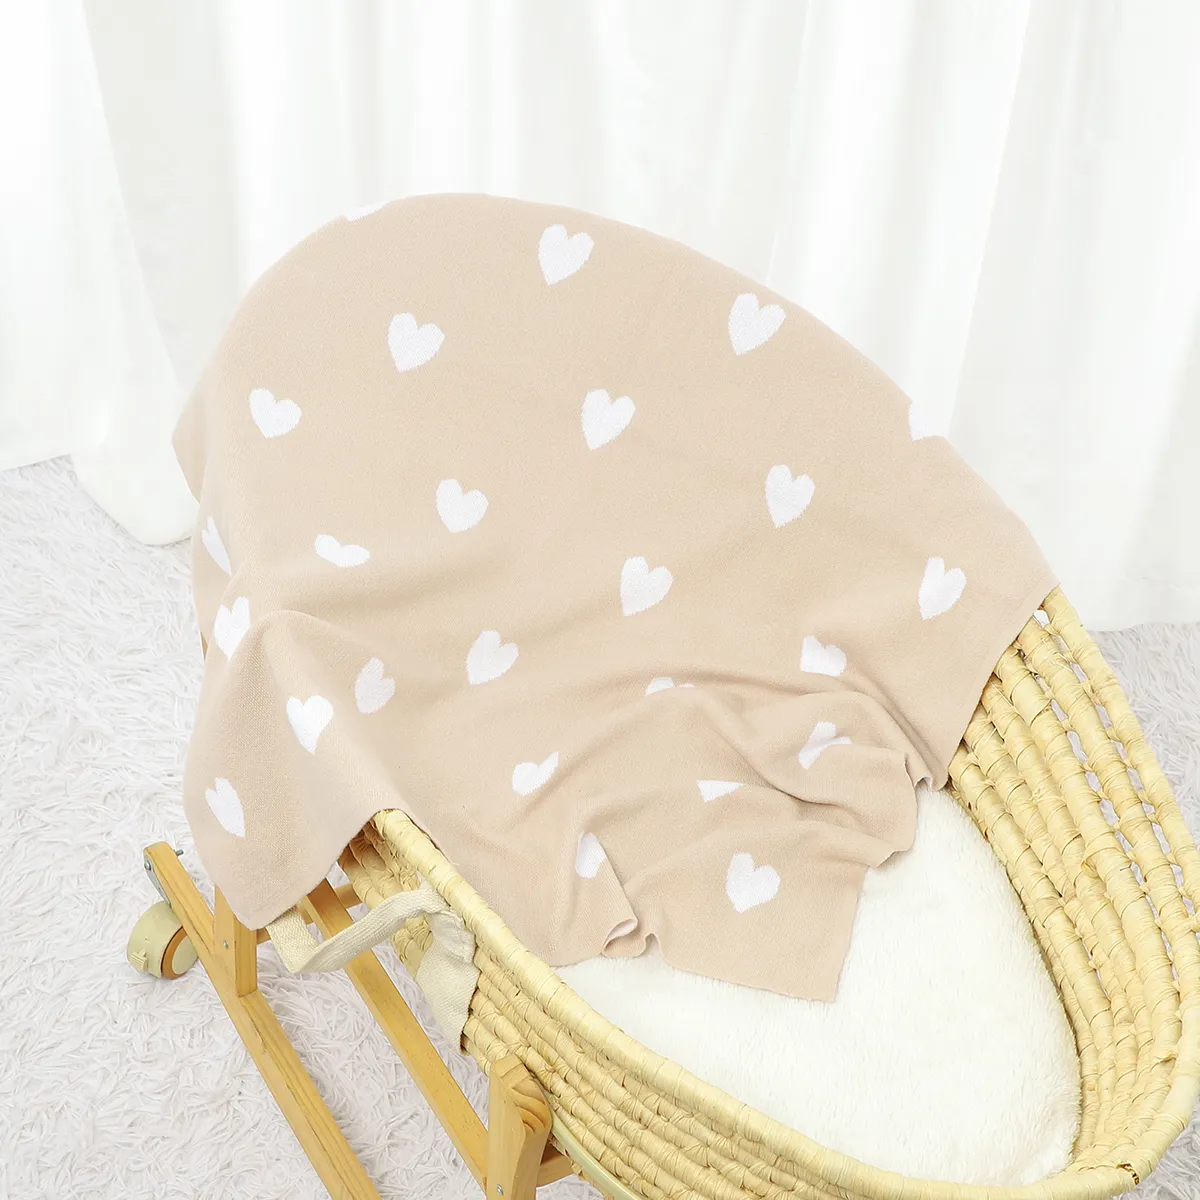 Selimut mandi bayi 100% katun lembut nyaman boks bayi selimut kereta bayi selimut mandi rajutan hati selimut penerima bayi untuk anak perempuan dan anak laki-laki